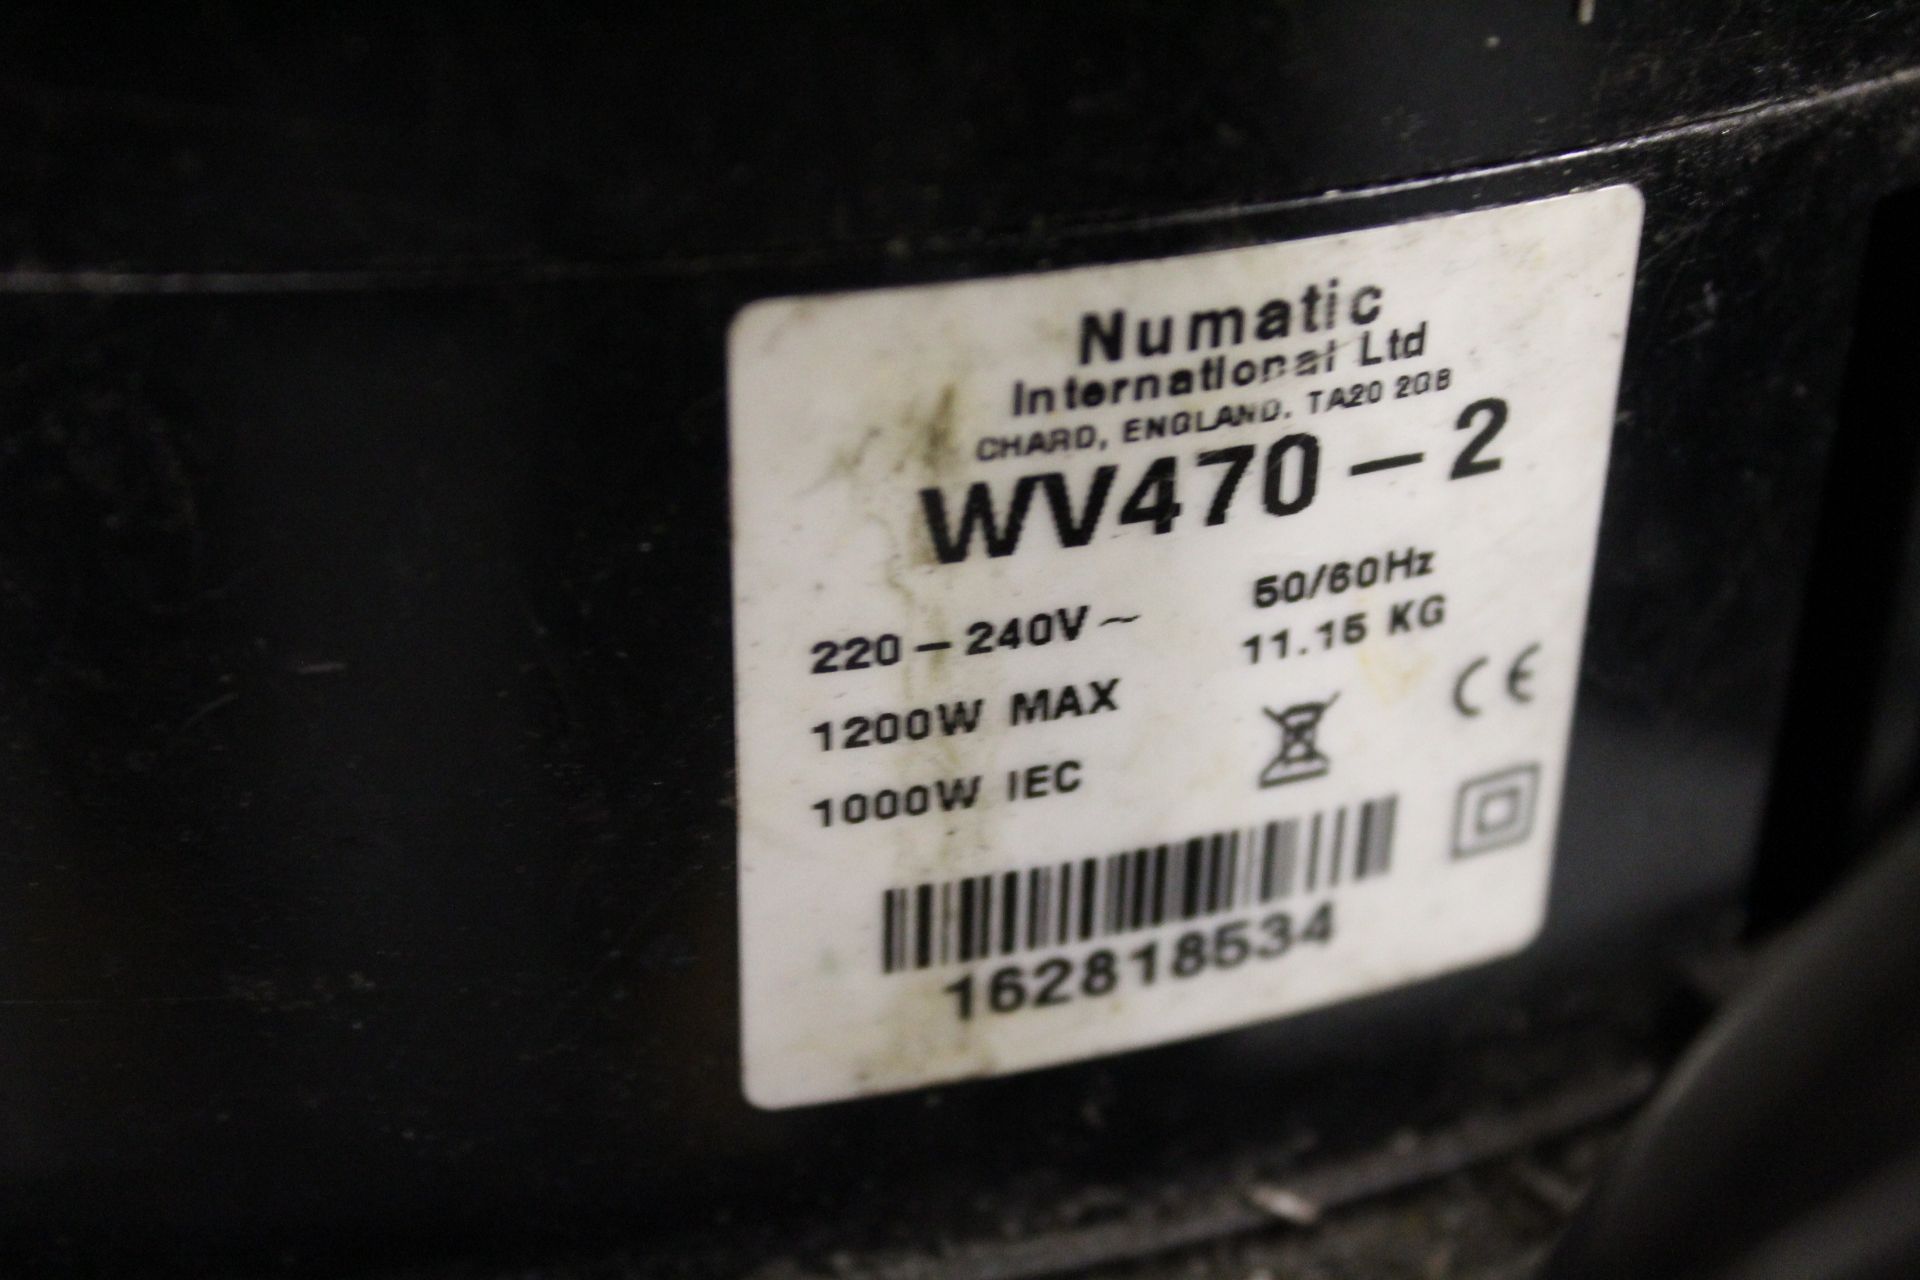 Numatic WV470-2 industrial vacuum, Serial No. 162818534 - Image 2 of 2